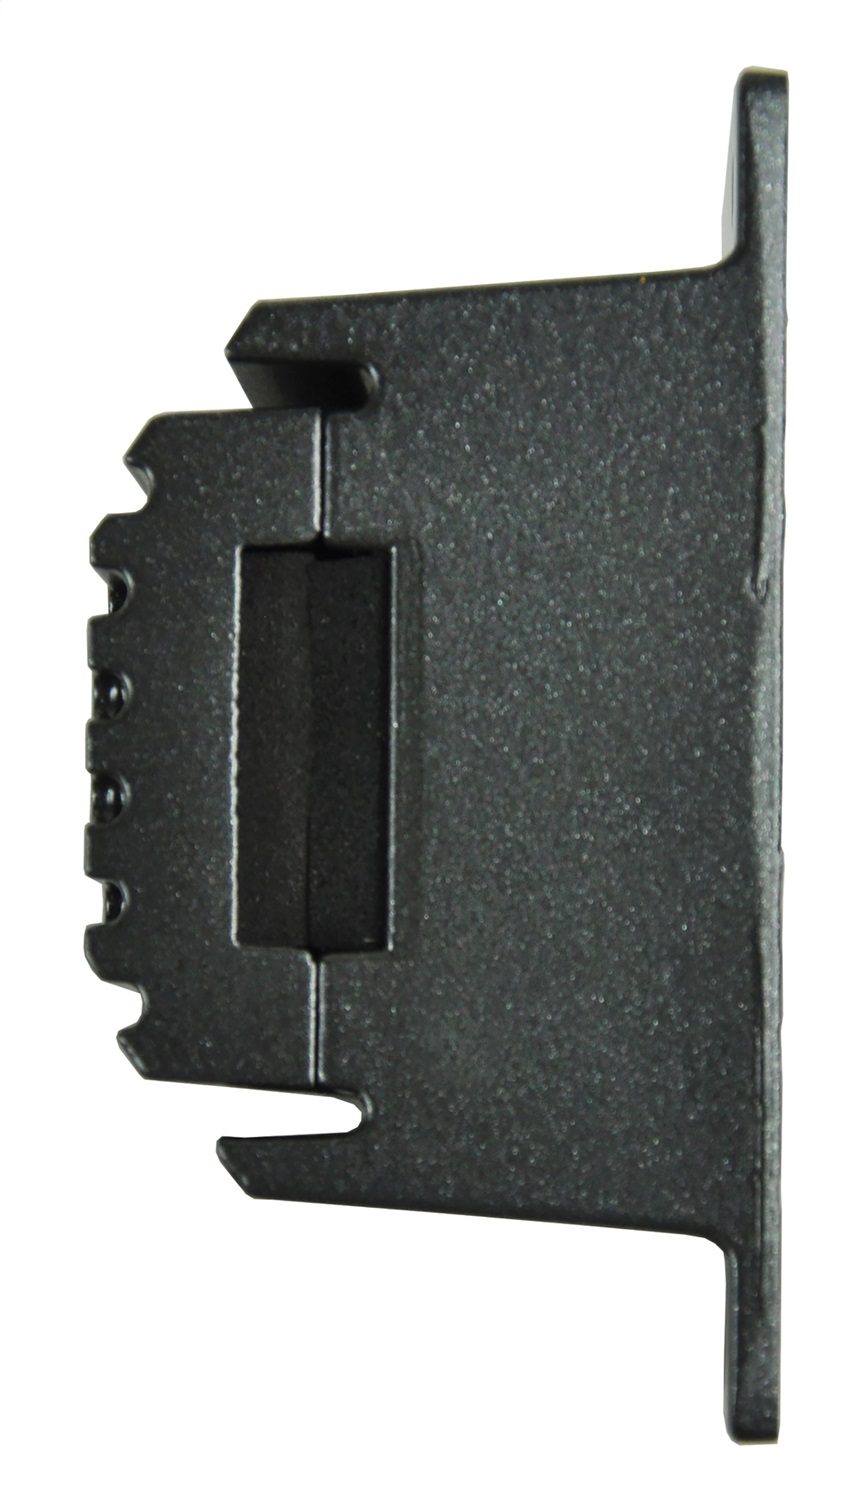 Derale 16795 Pulse-Width Modulation Fan Controller